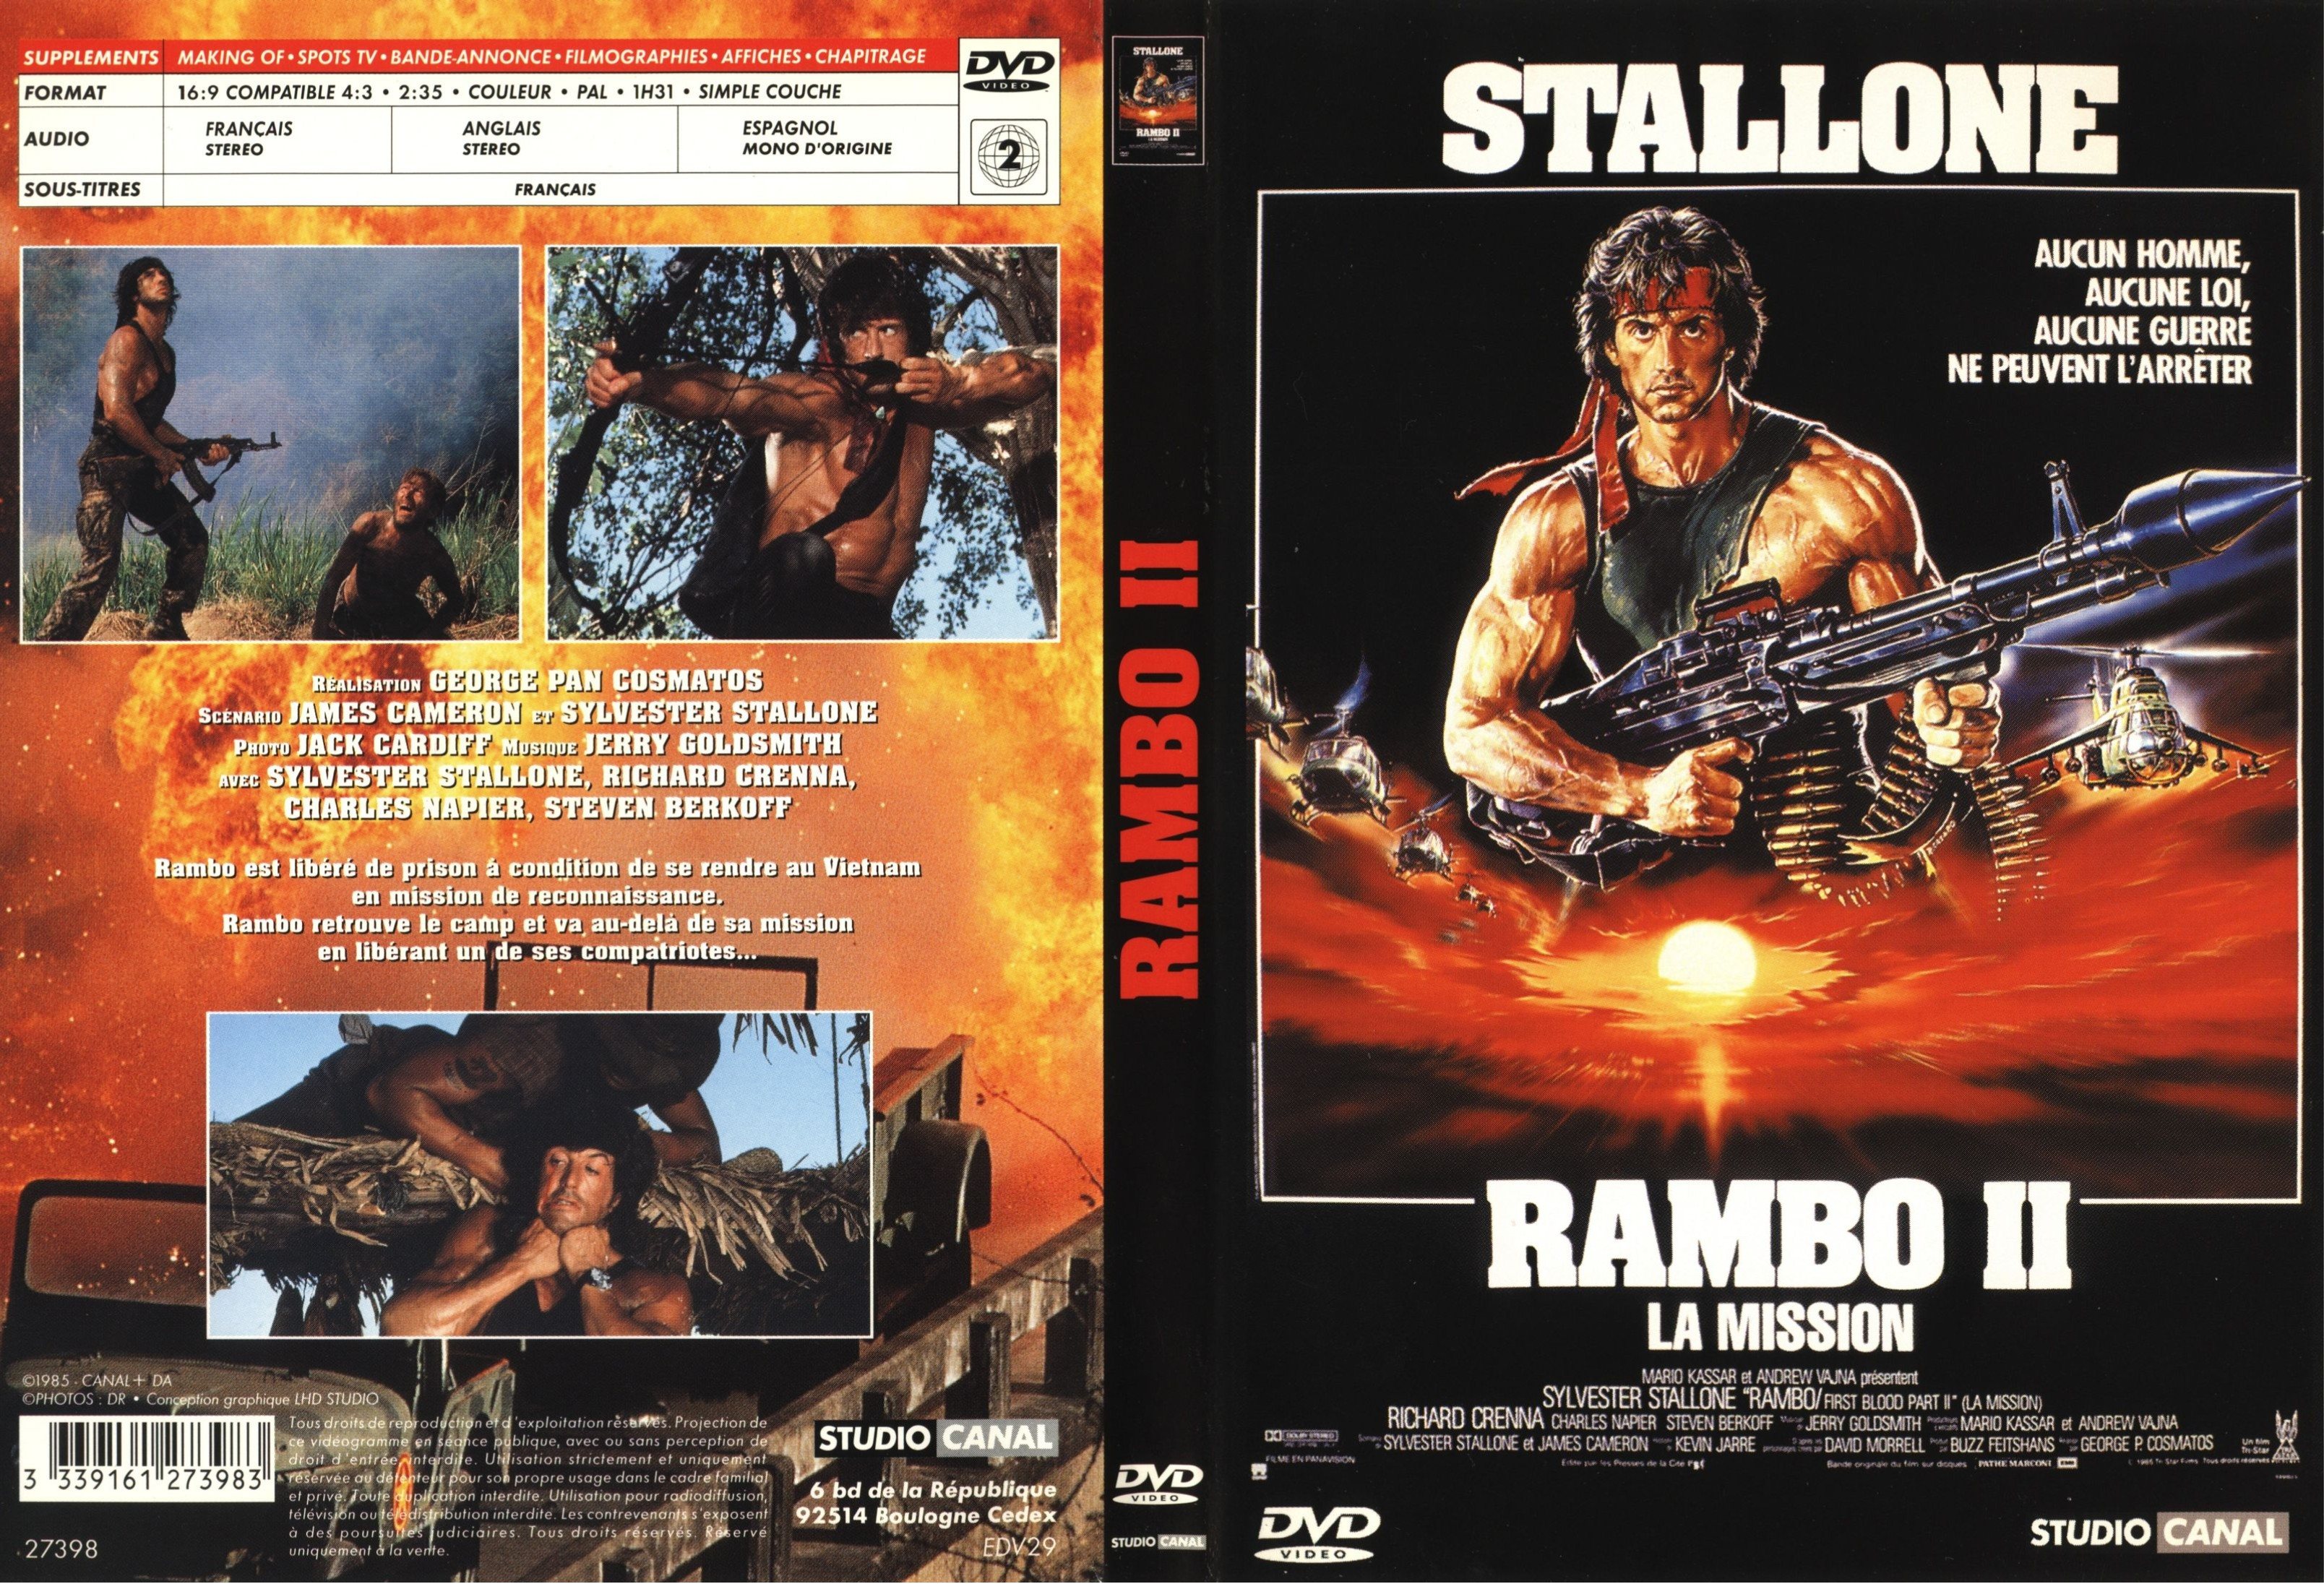 Jaquette DVD Rambo 2